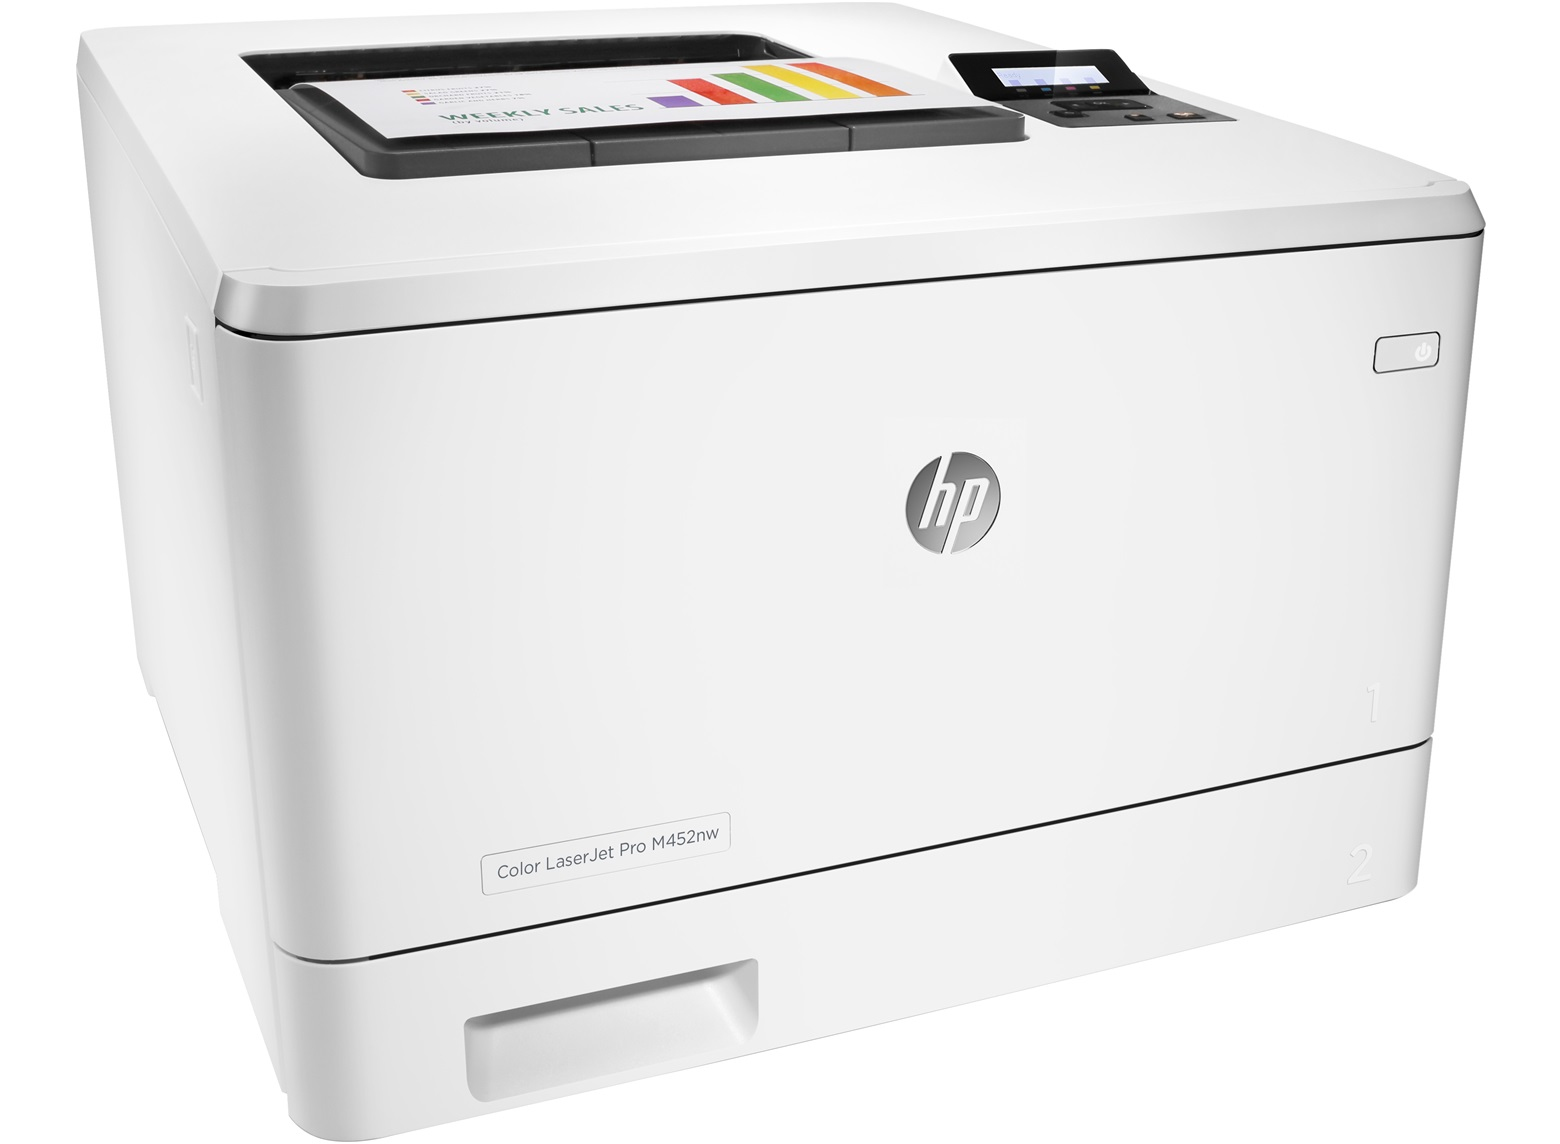 HP Color LaserJet Pro M452dn Printer 27ppm A4/28ppm Letter color laser ...